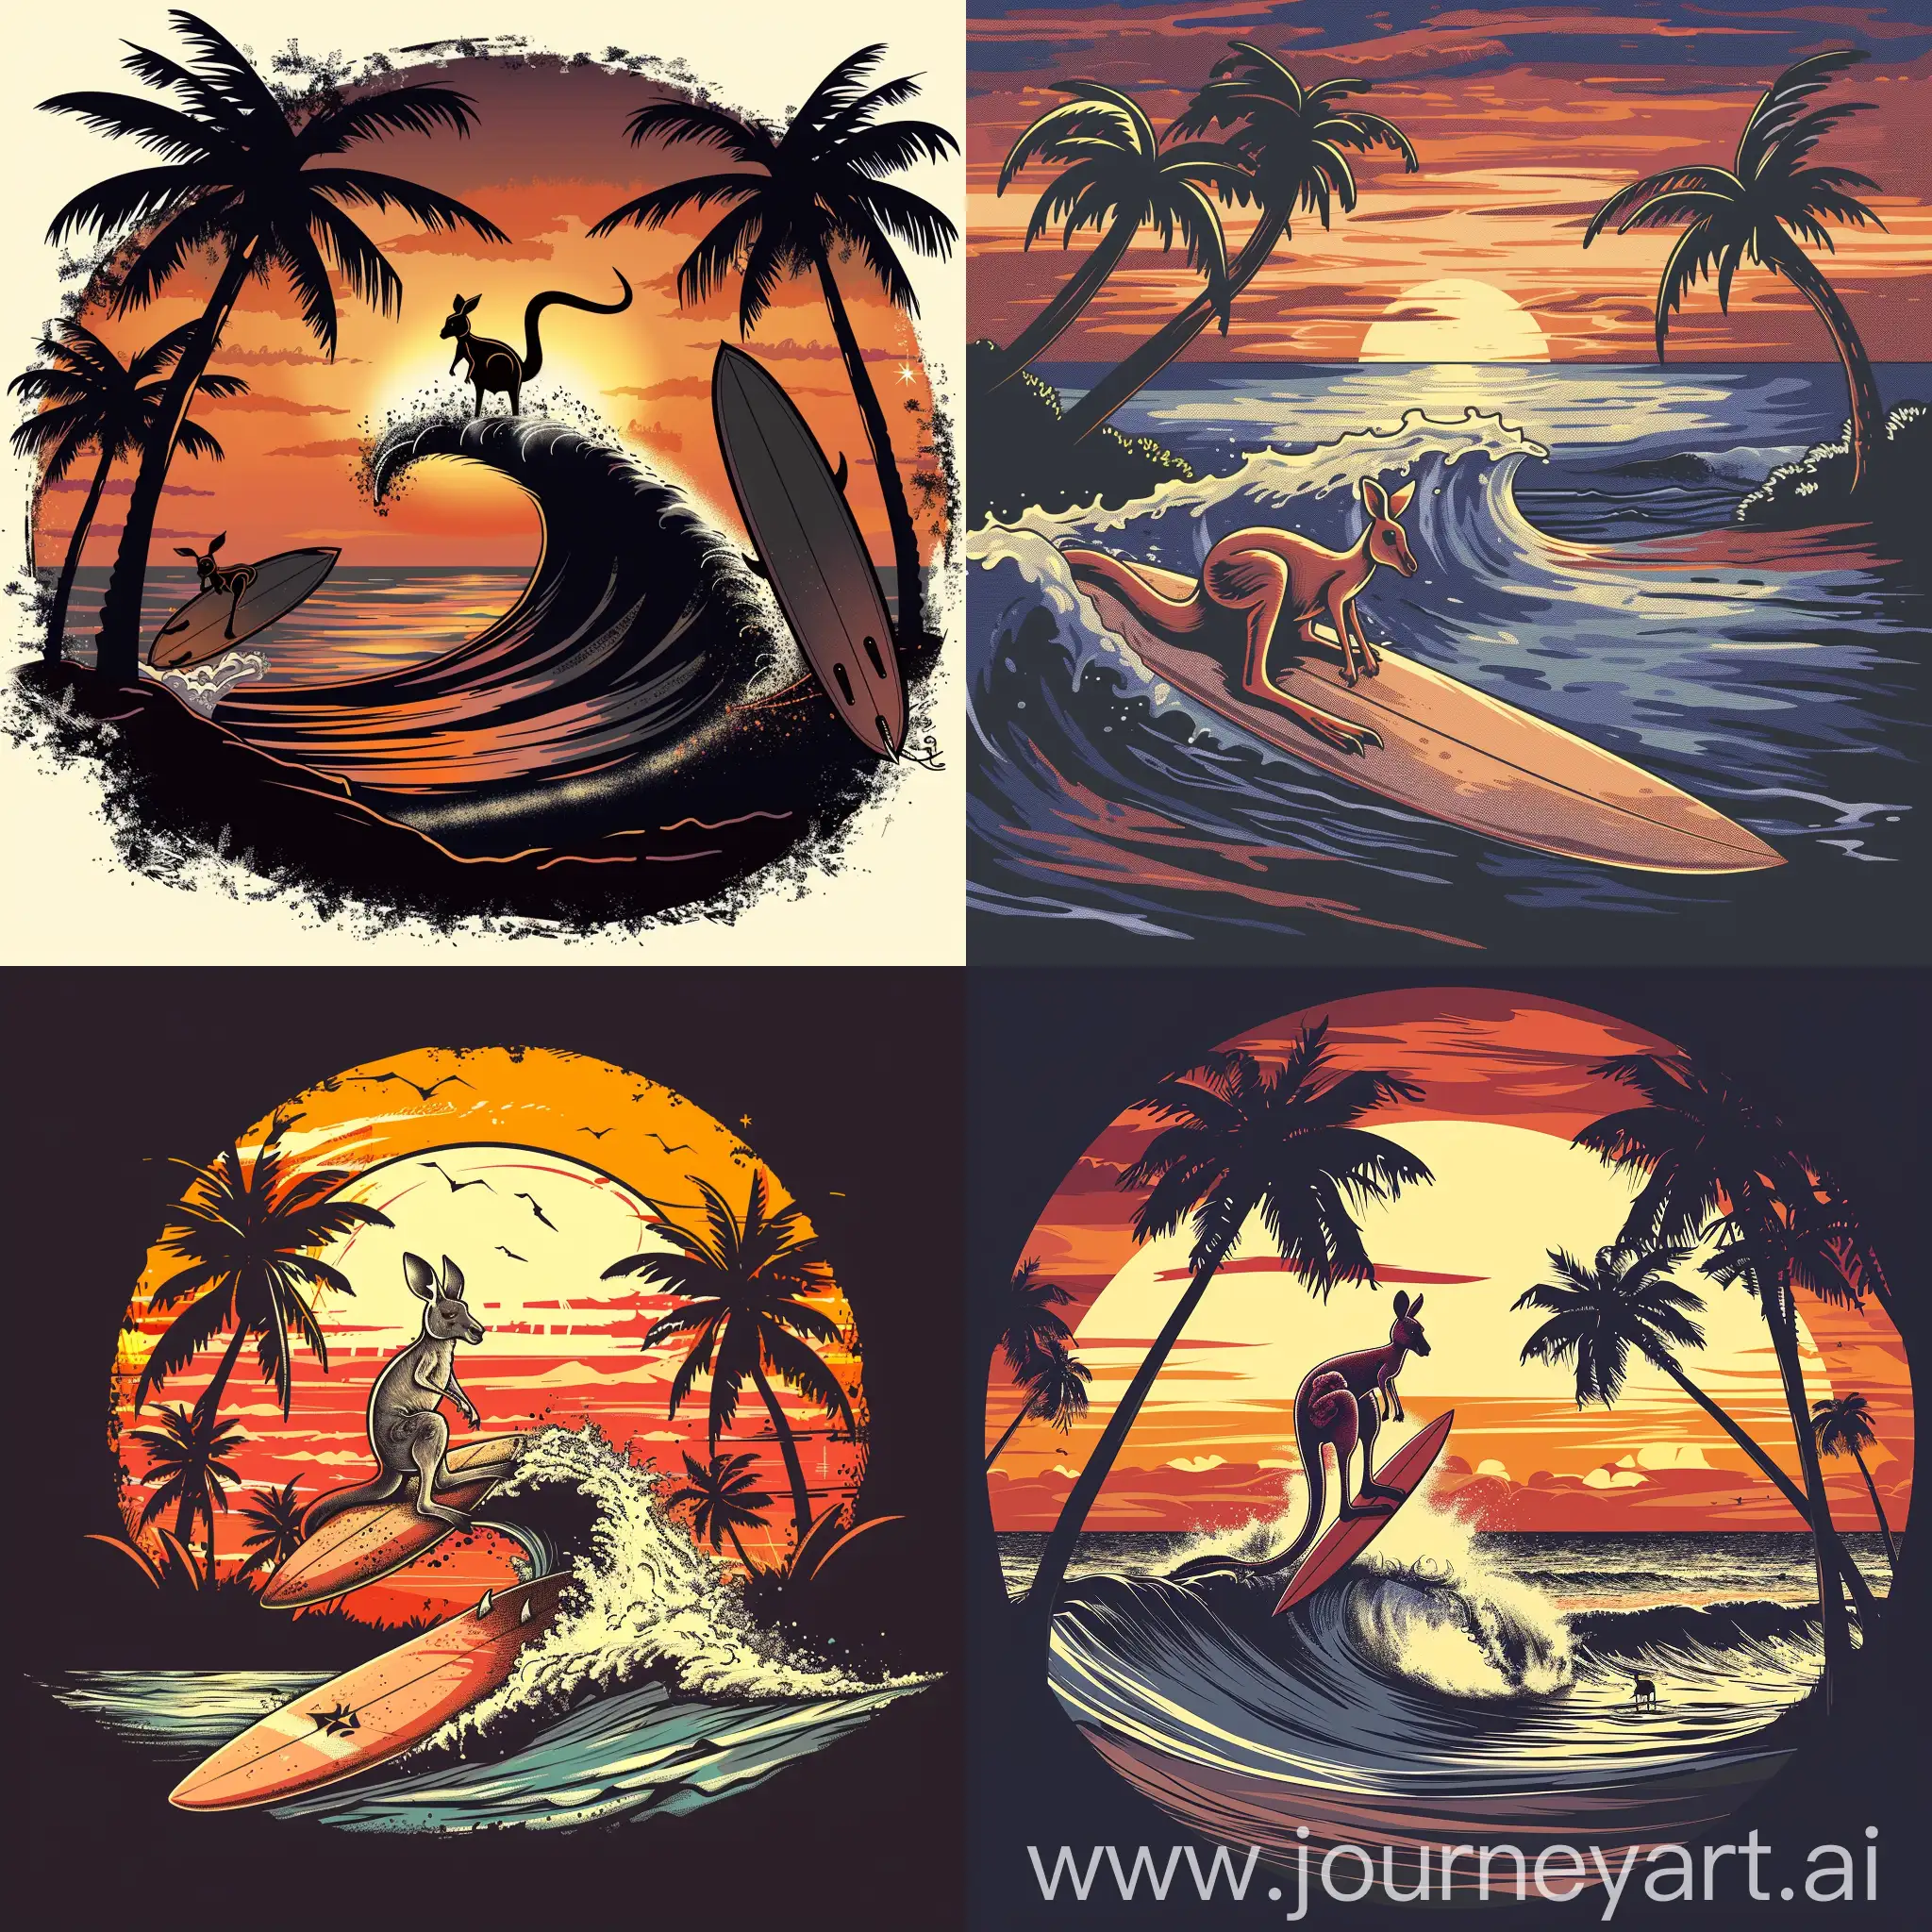 90s-Cartoon-Surfing-Kangaroo-on-Sunset-Wave-with-Palm-Trees